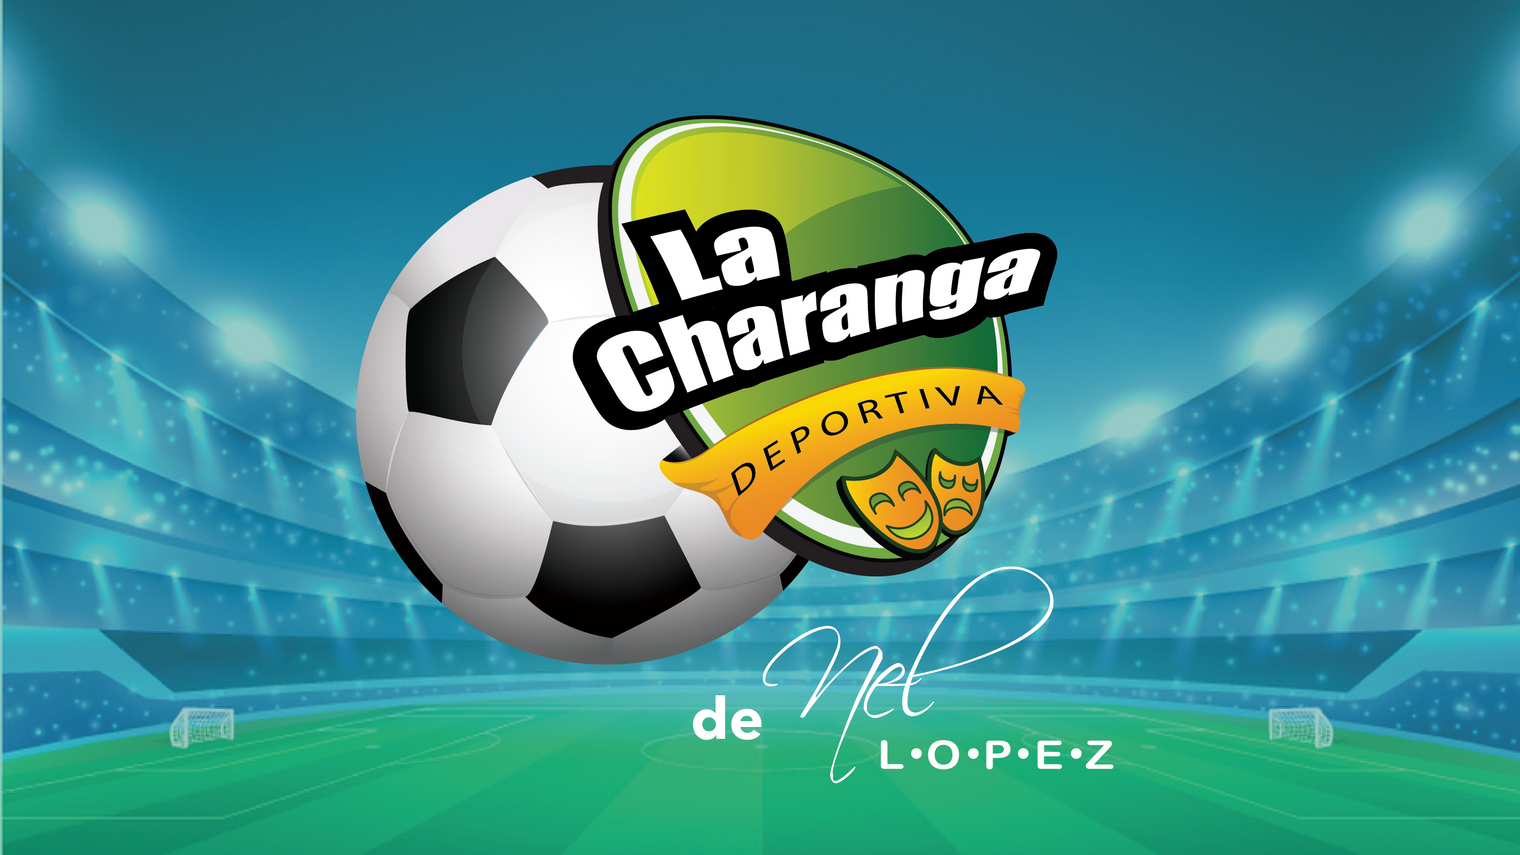 La Charanga Deportiva